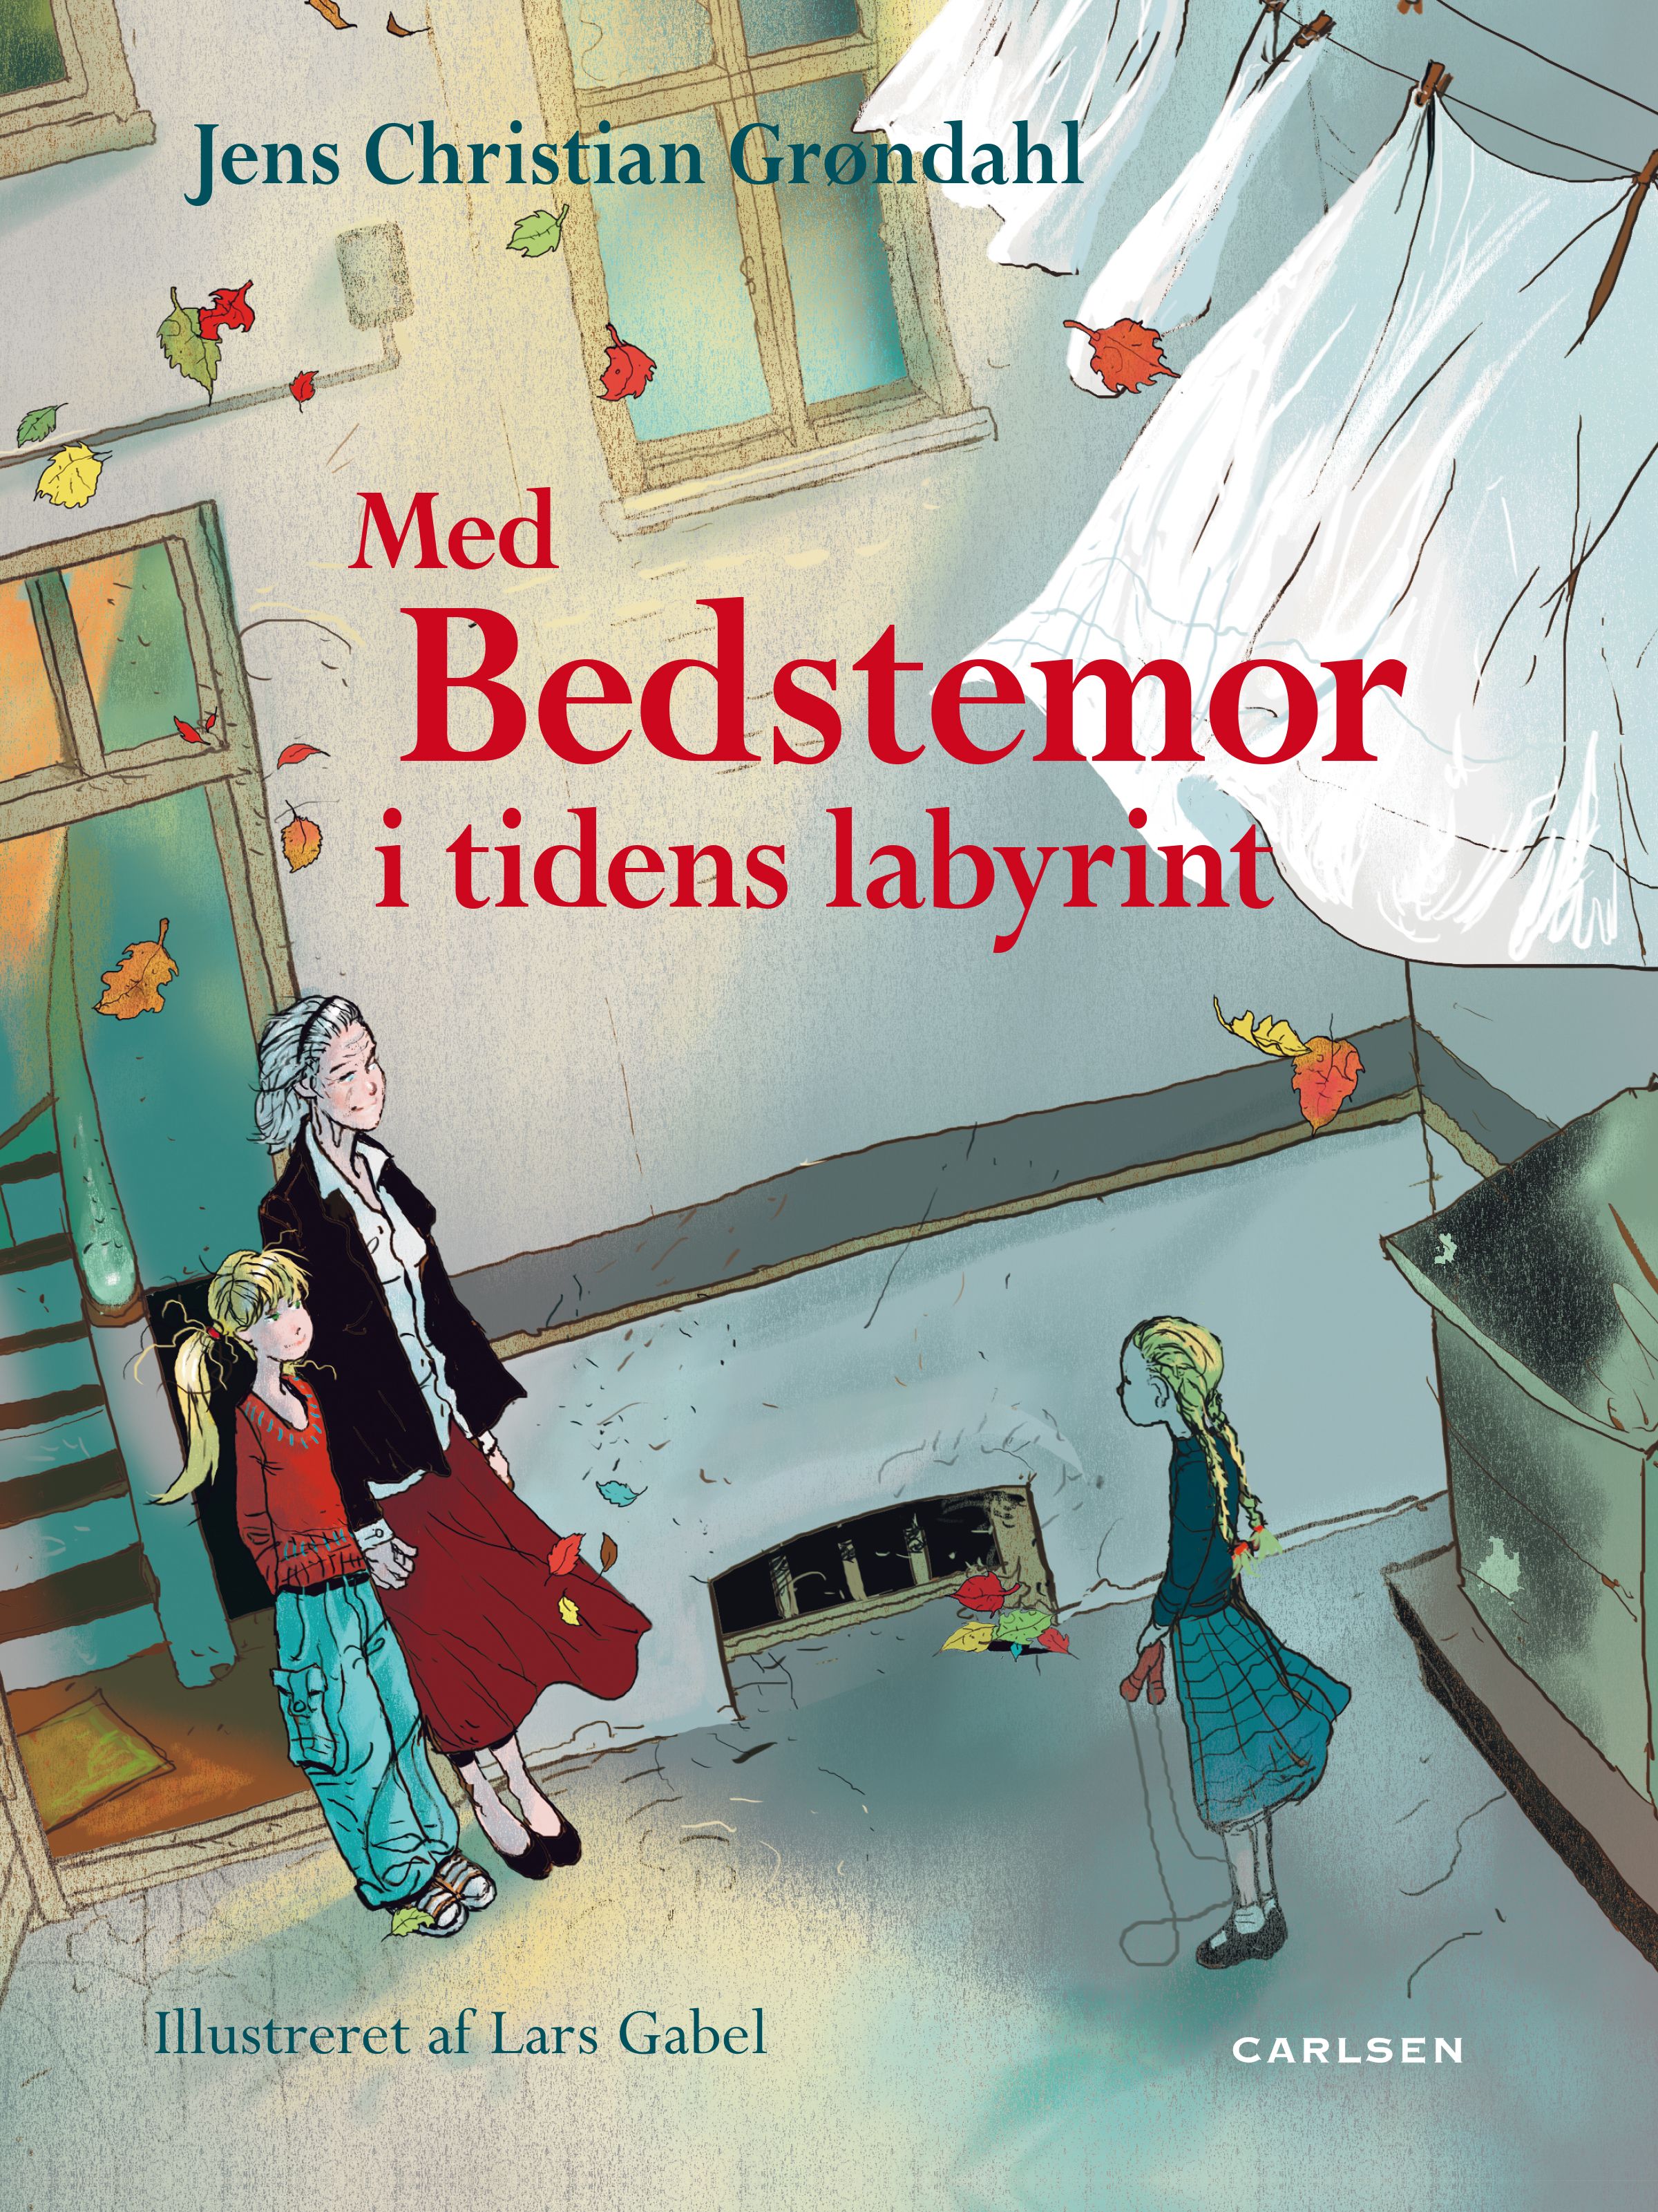 Med bedstemor i tidens labyrint, eBook by Jens Christian Grøndahl